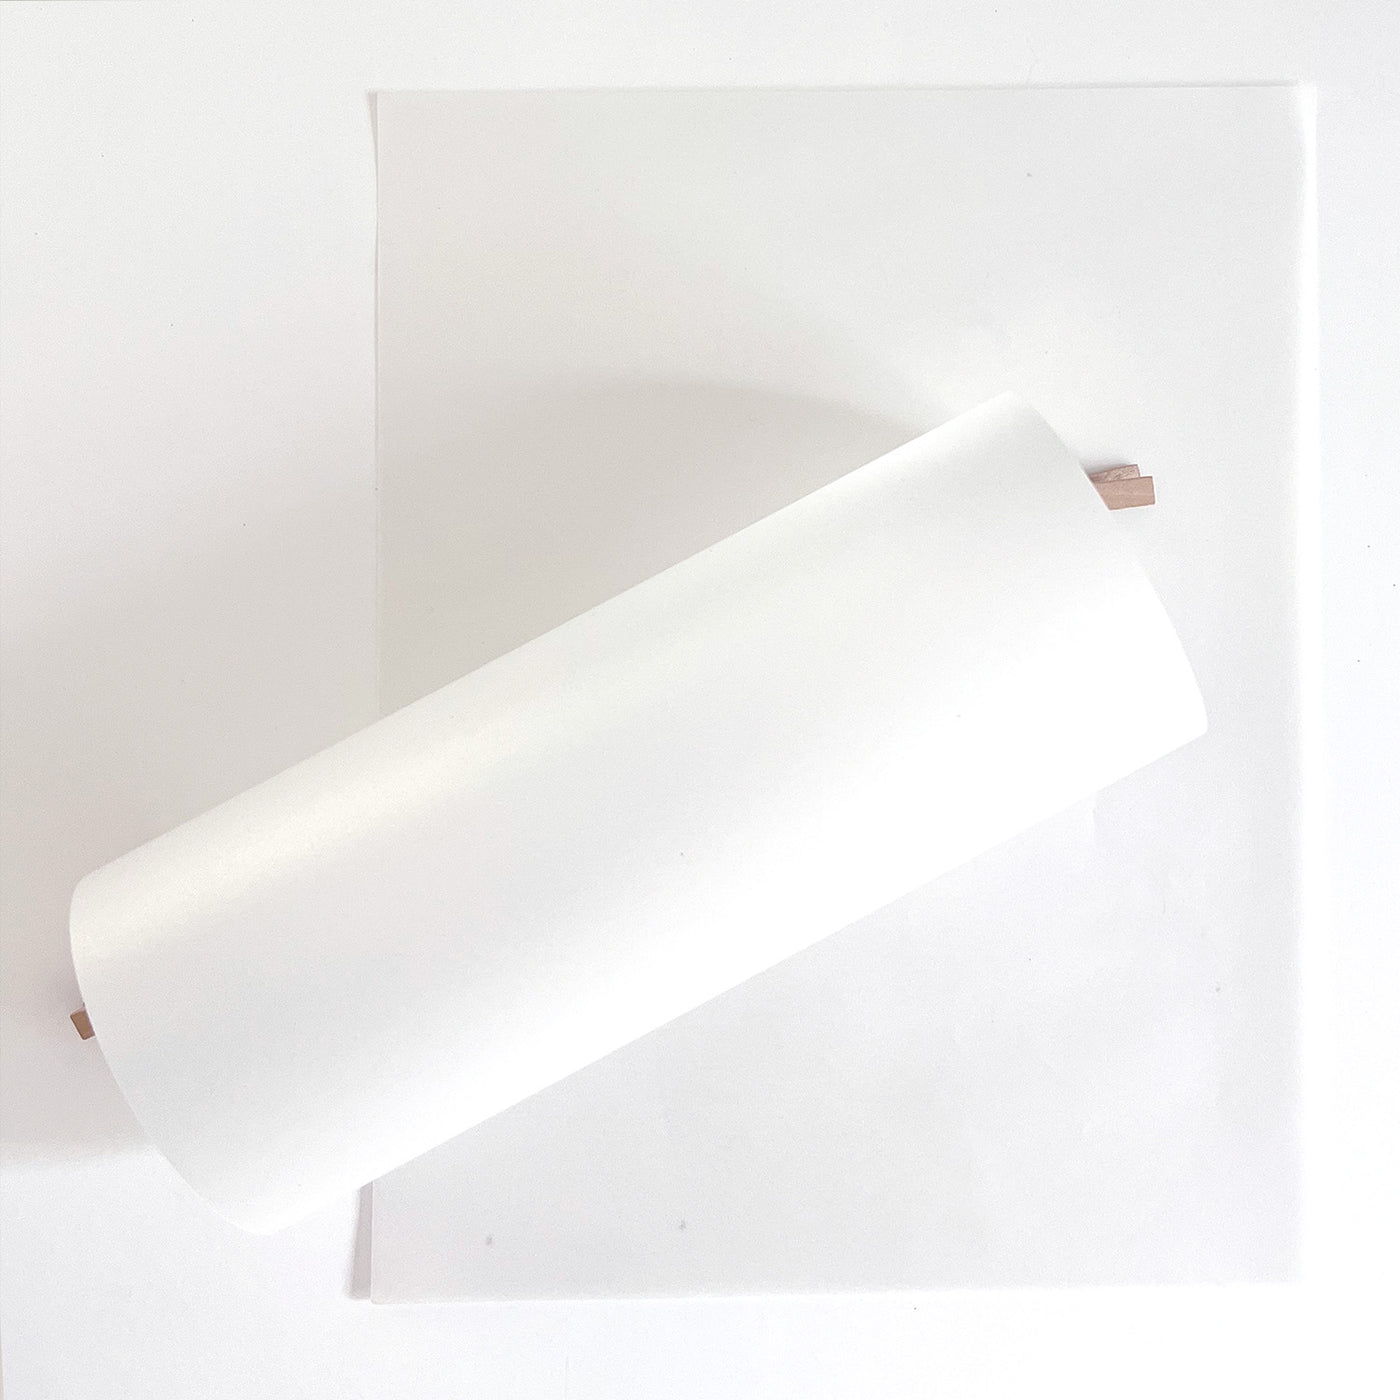 10 x A4 100gsm Printed Translucent Vellum Paper - White Hearts Design AM526